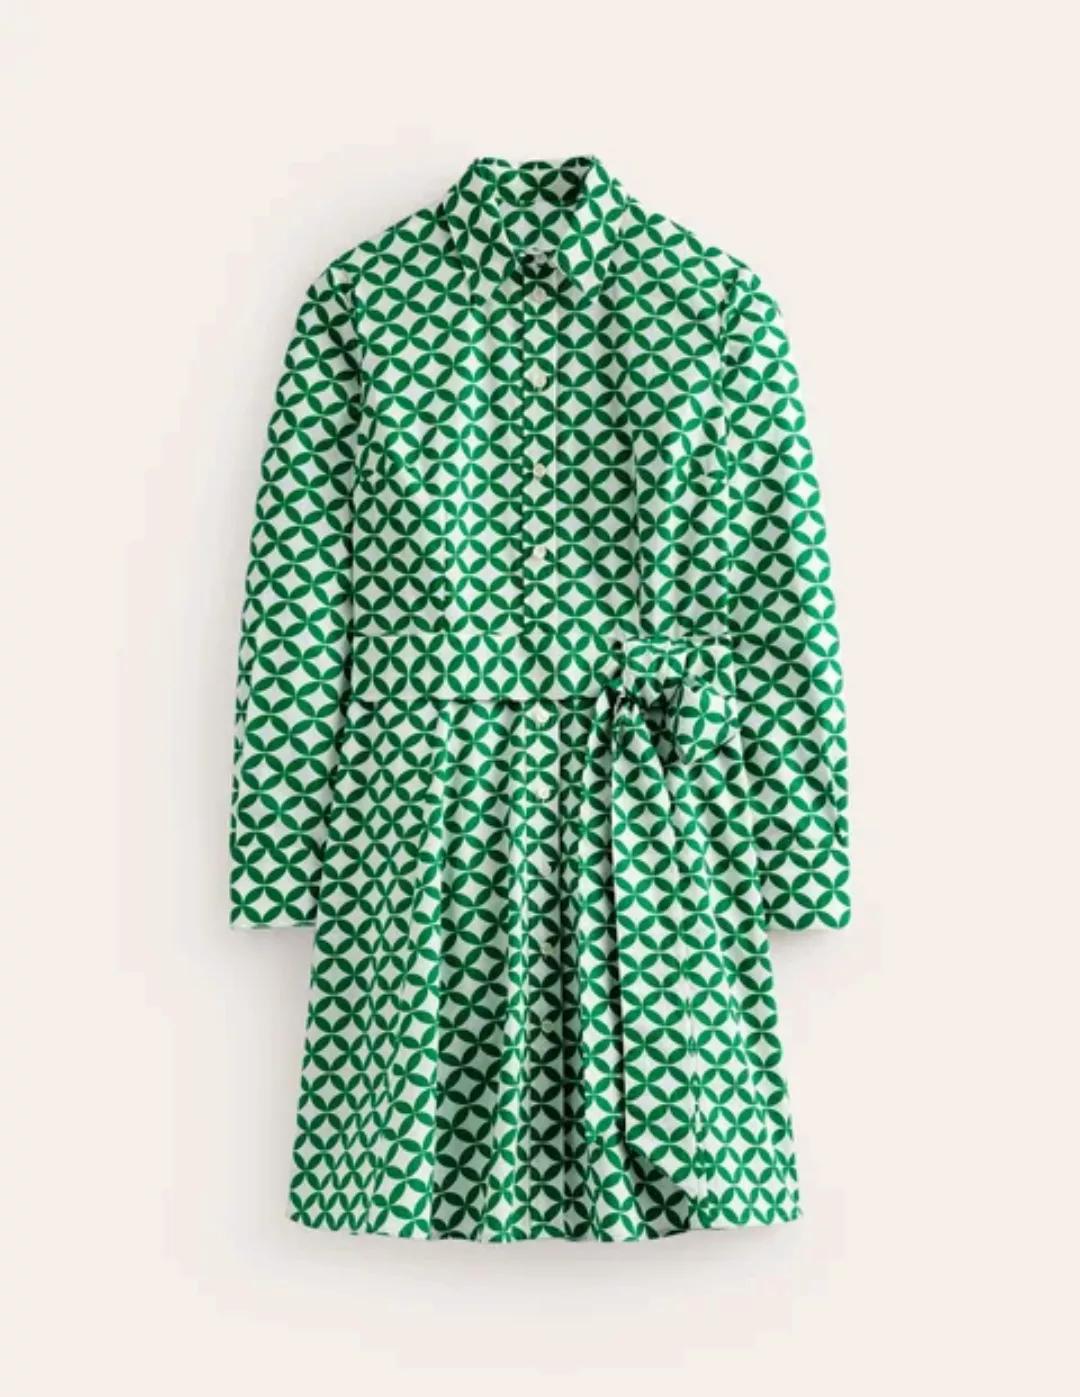 Amy Kurzes Hemdblusenkleid aus Baumwolle Damen Boden, Grün, Diamond Terrace günstig online kaufen